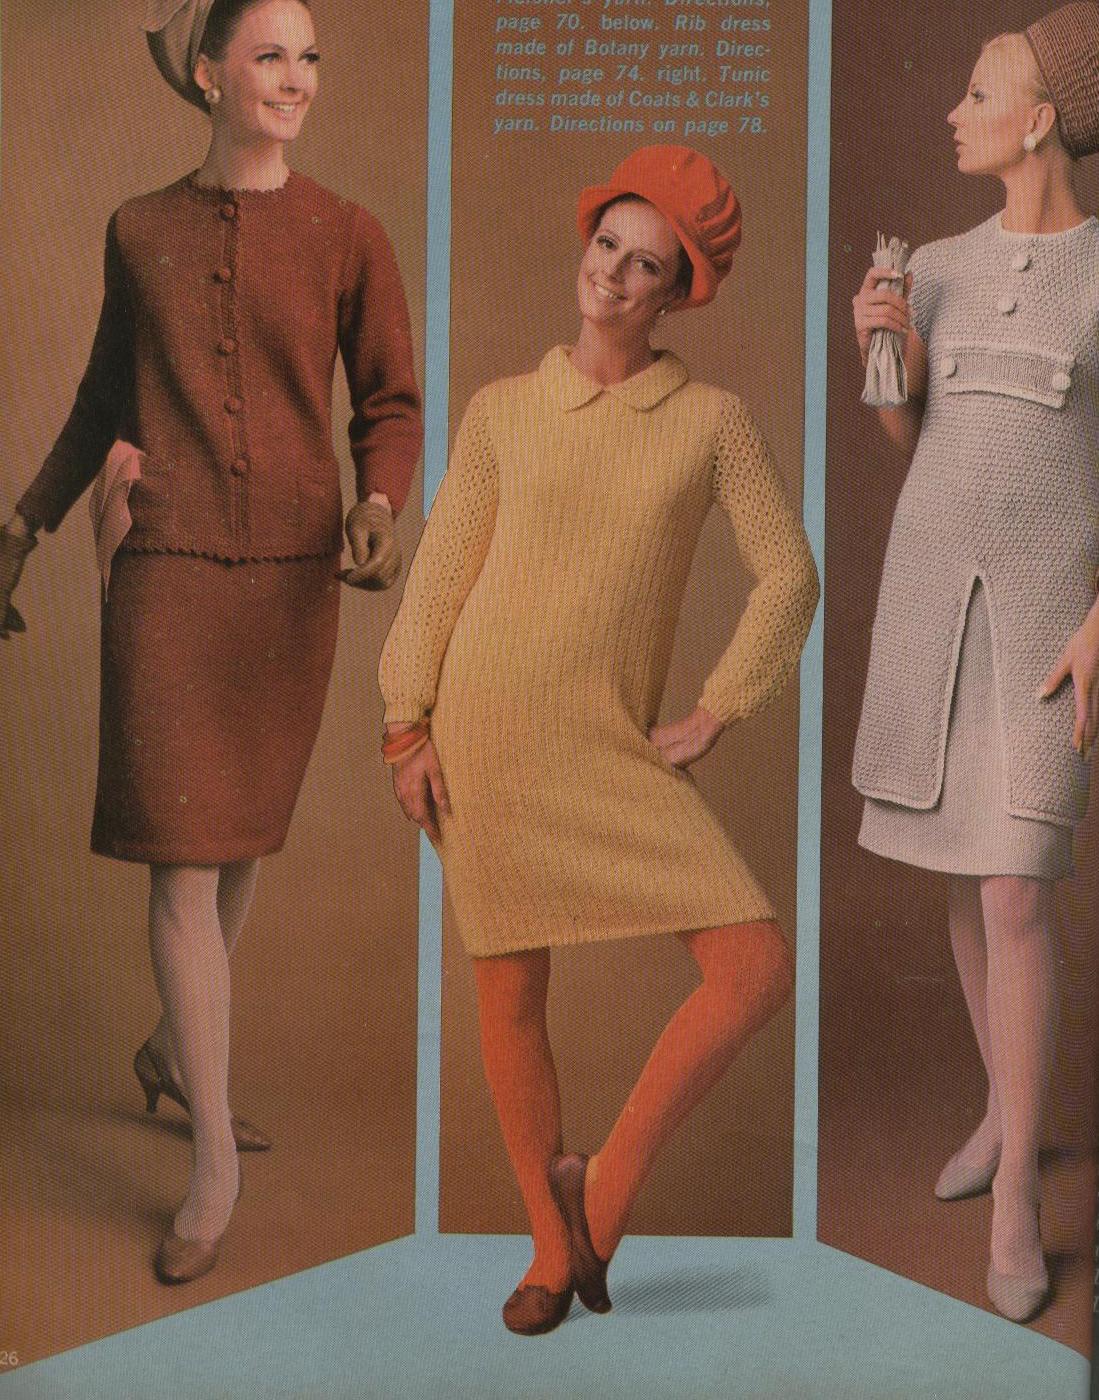 Tunic Dress Suit Sheath vintage pattern